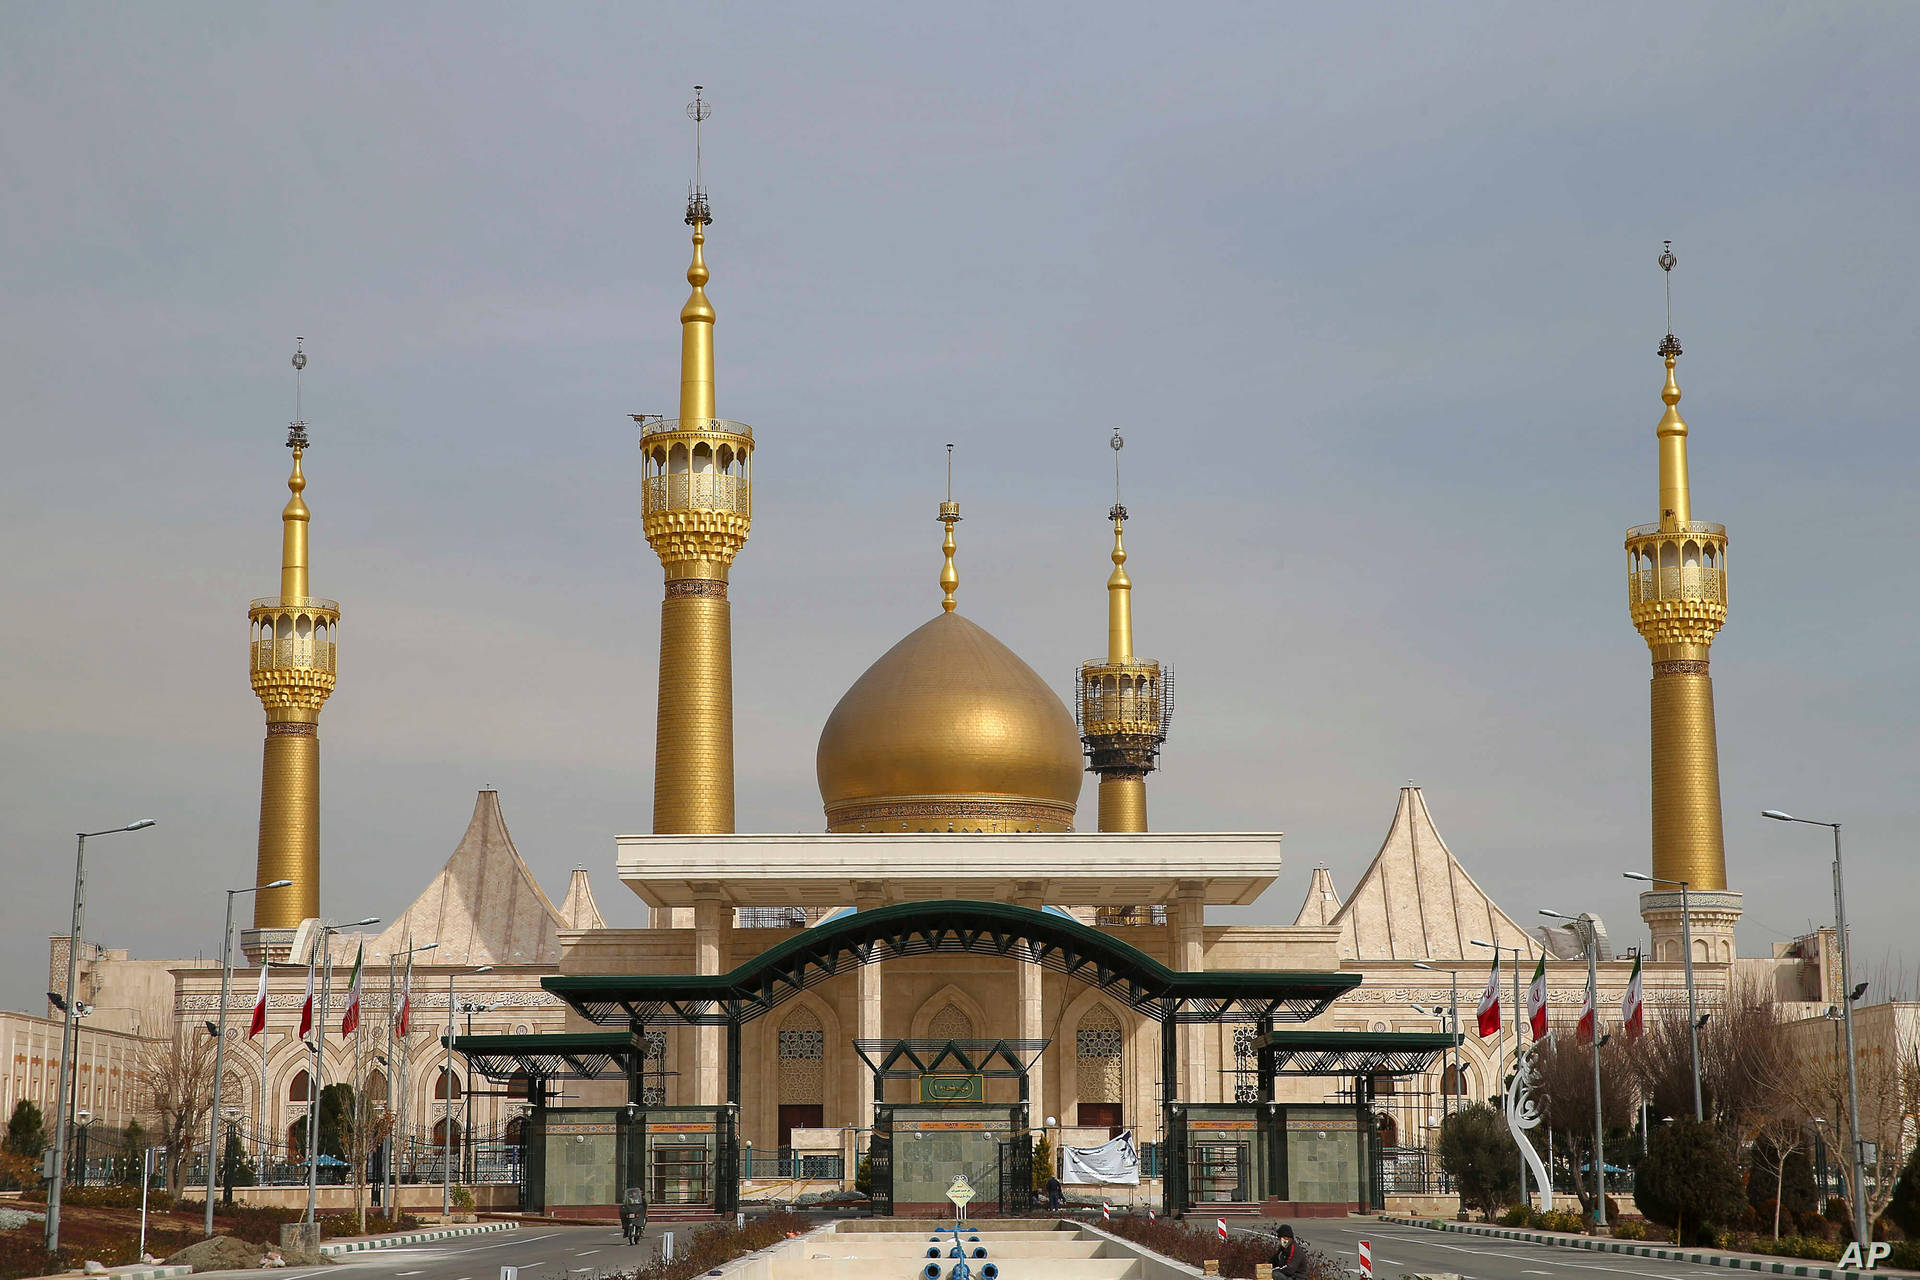 Grand Golden Mosque In Iran